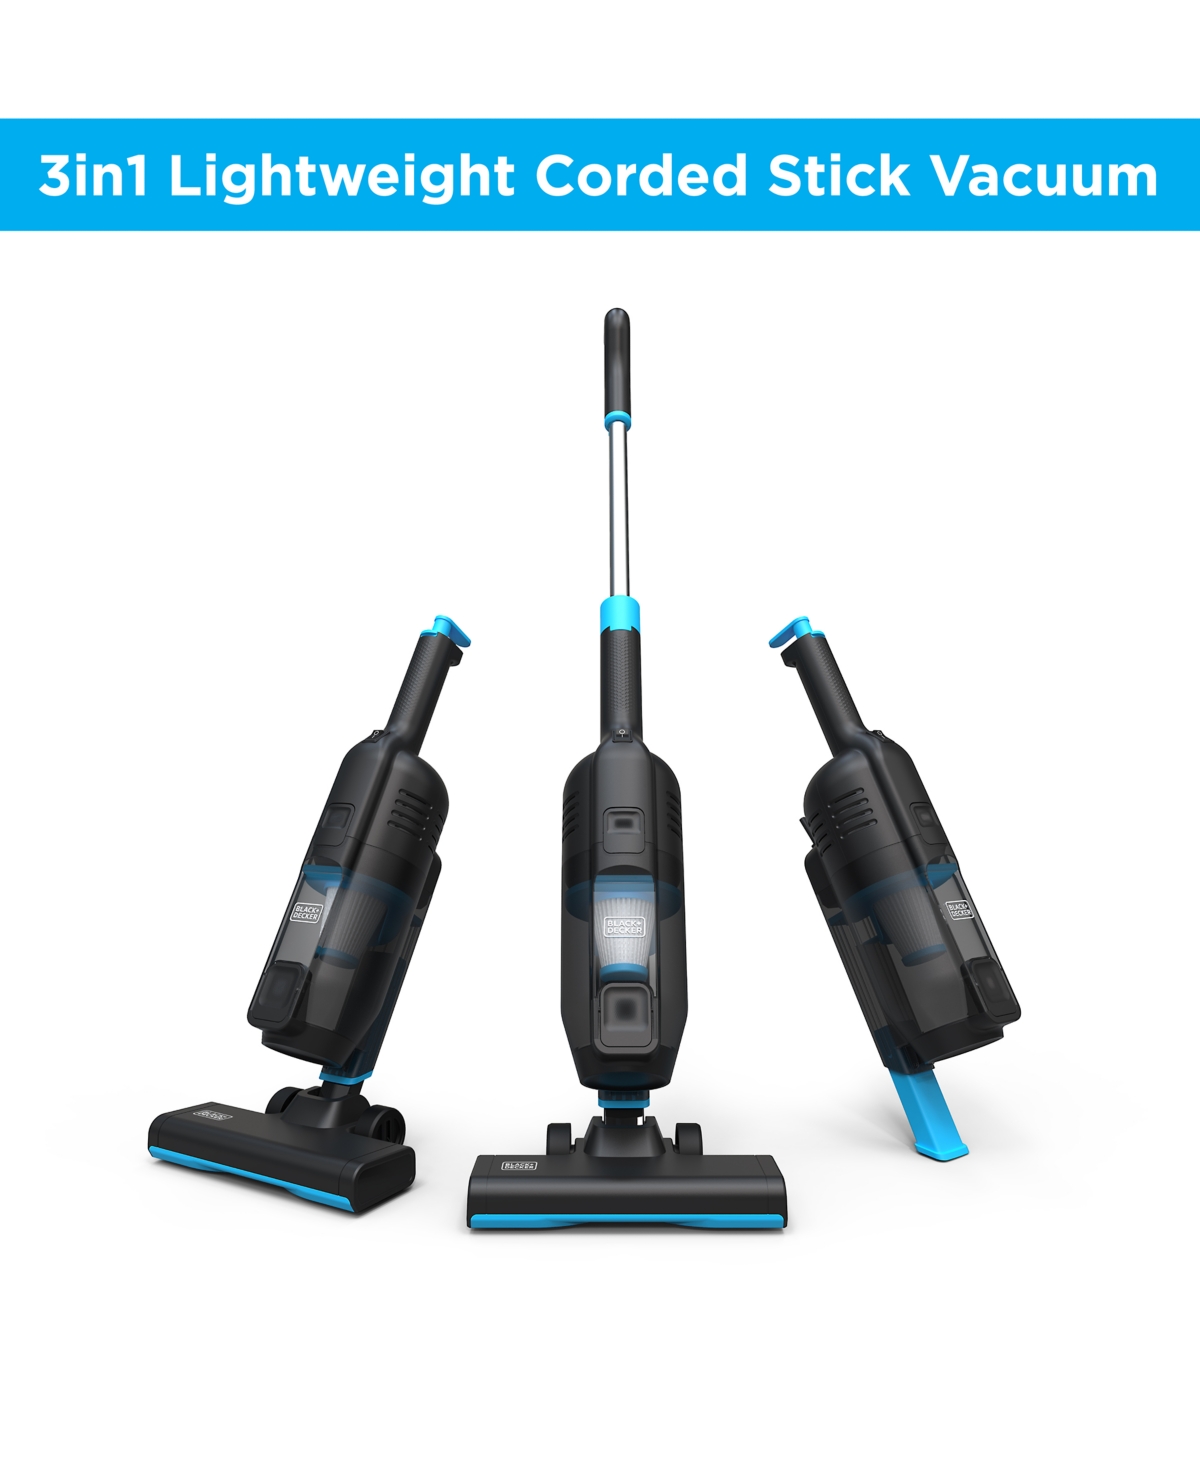 Black & Decker Power Series Lite 3-in-1 Corded Stick Vacuum - Black/blue